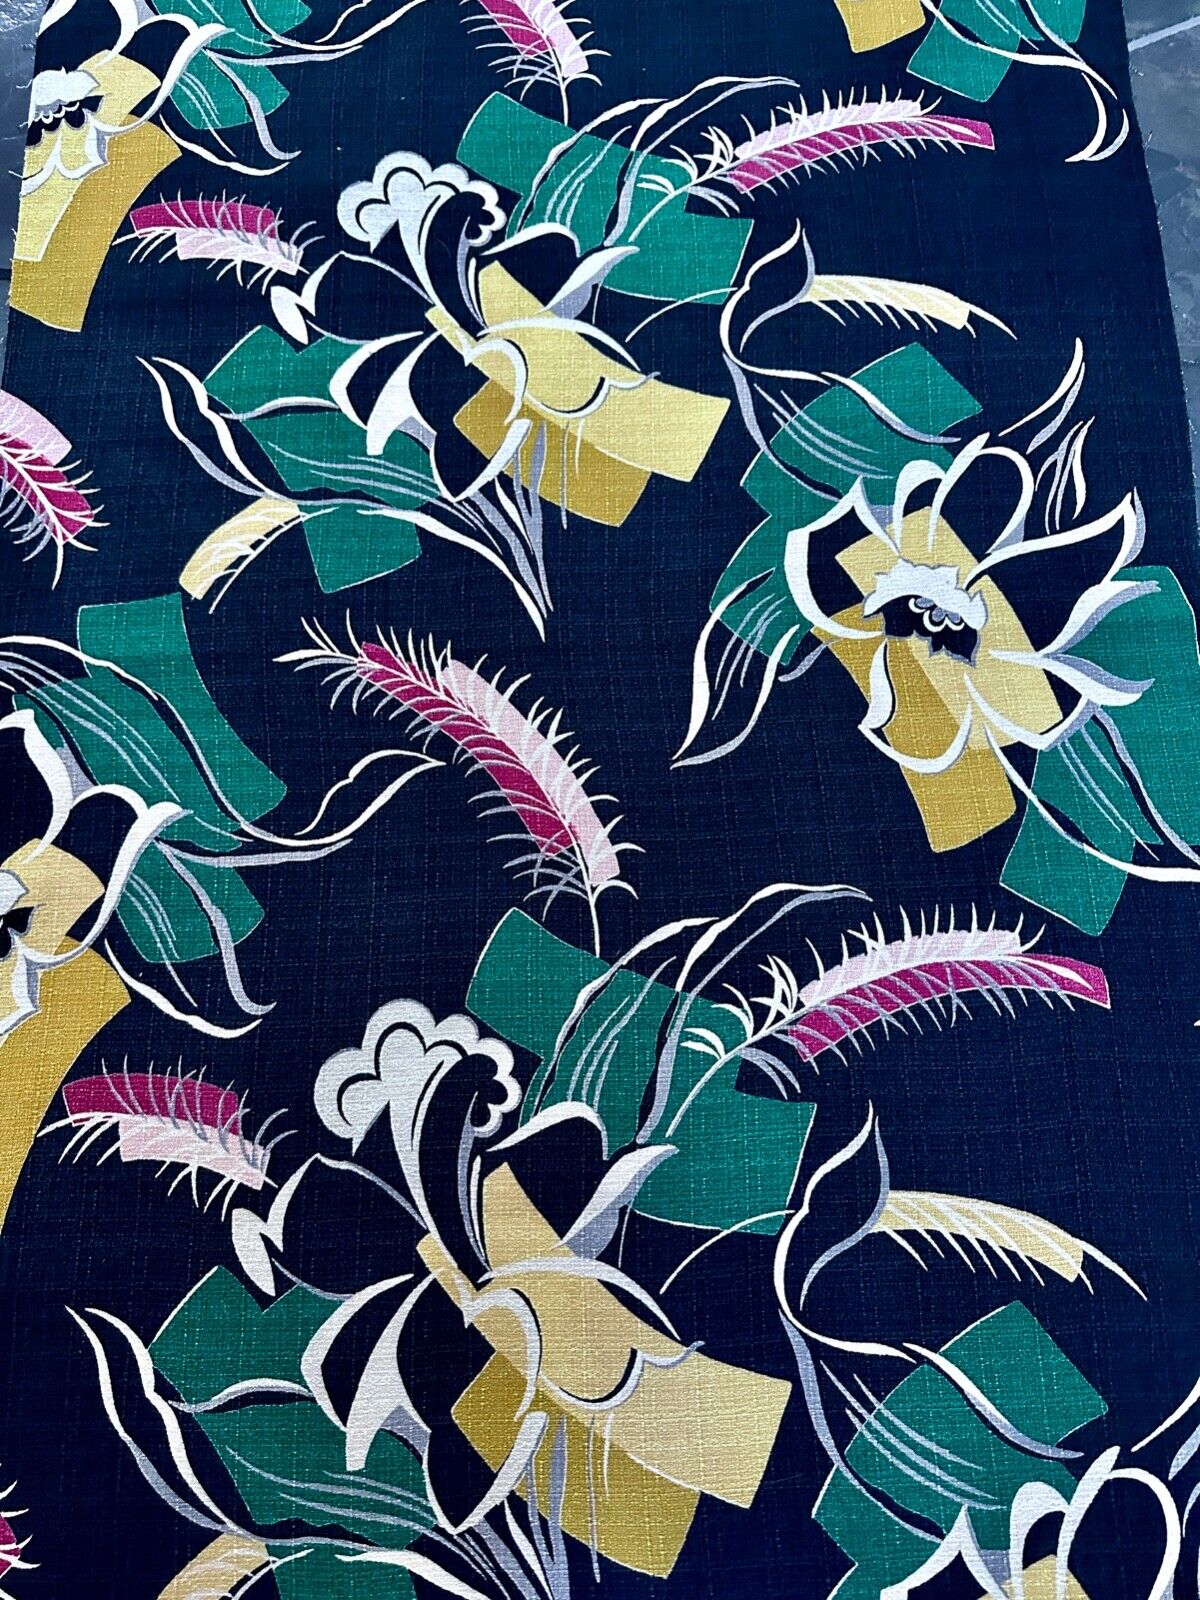 Miami Beach Dynamite Art Deco Abstract Magnolias Black Barkcloth Vintage Fabric